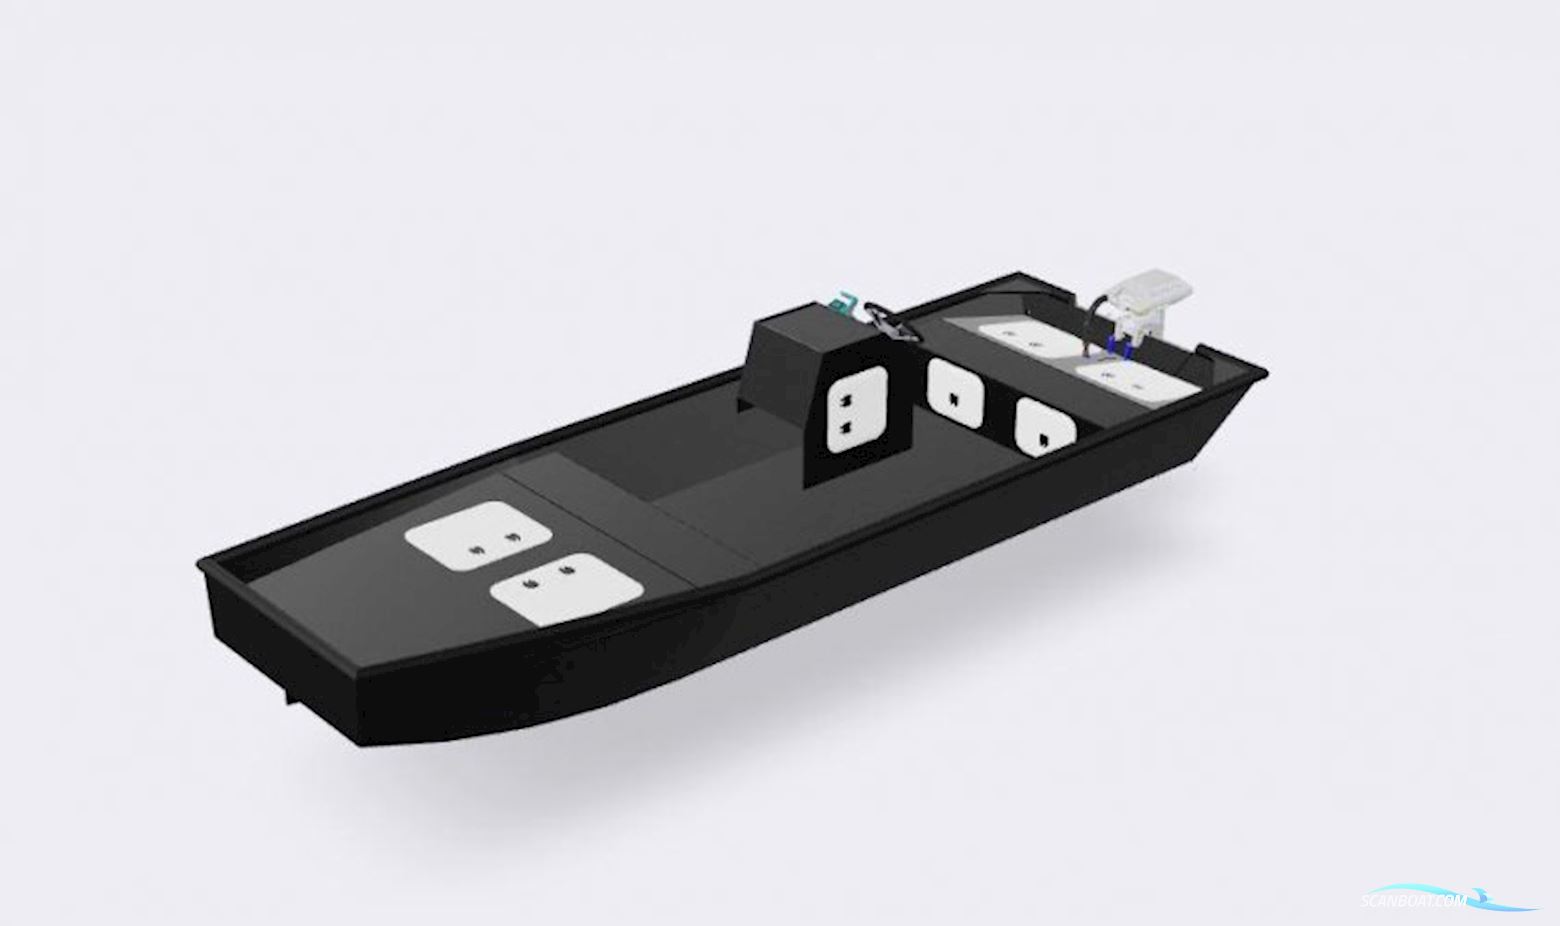 Black Workboats 500 Pro Console Motorbåd 2023, med Suzuki / Honda / Elektrisch motor, Holland